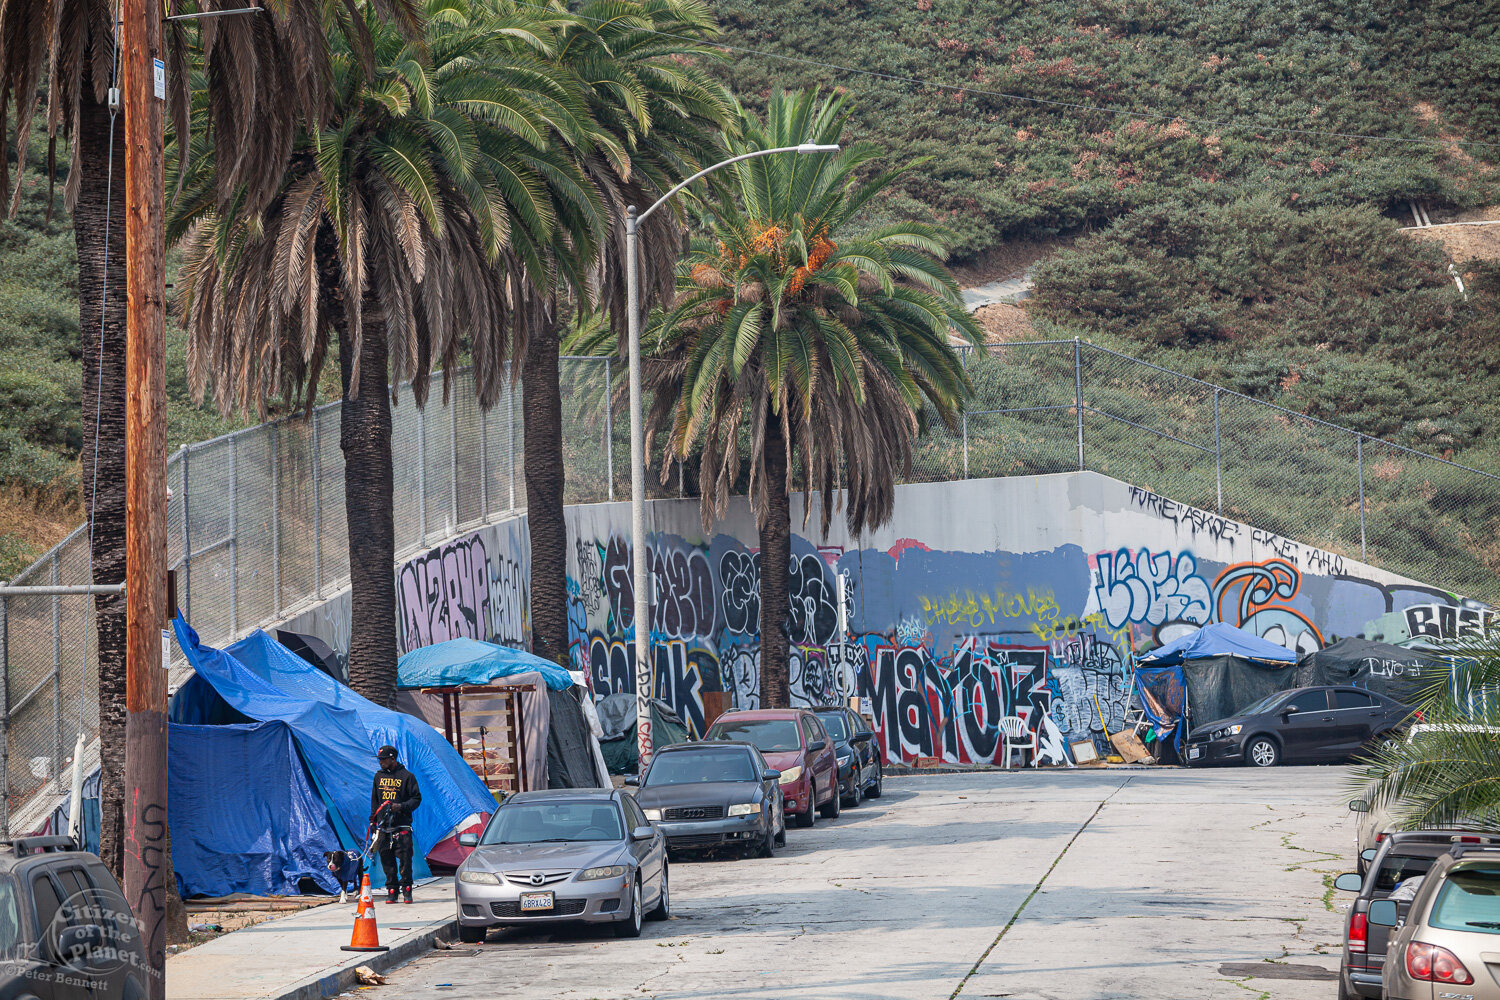  A homeless camp along Emerald Street in the Vista Hermosa neighborhood.  